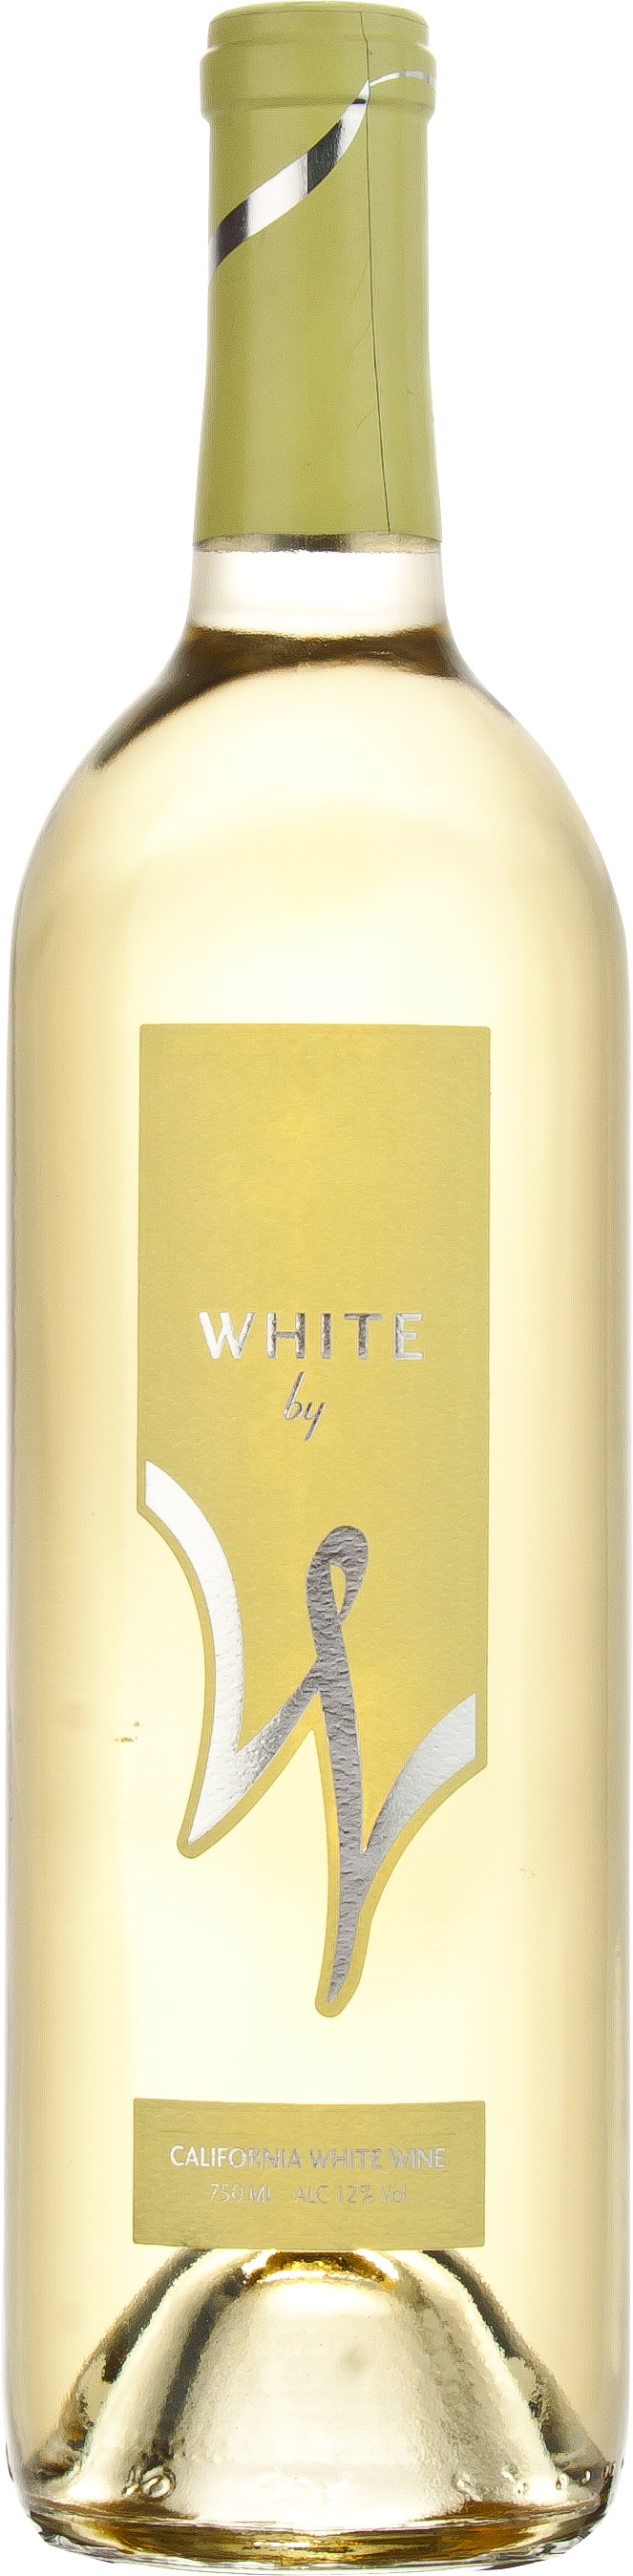 Weinstock White by W 09 noV.jpg